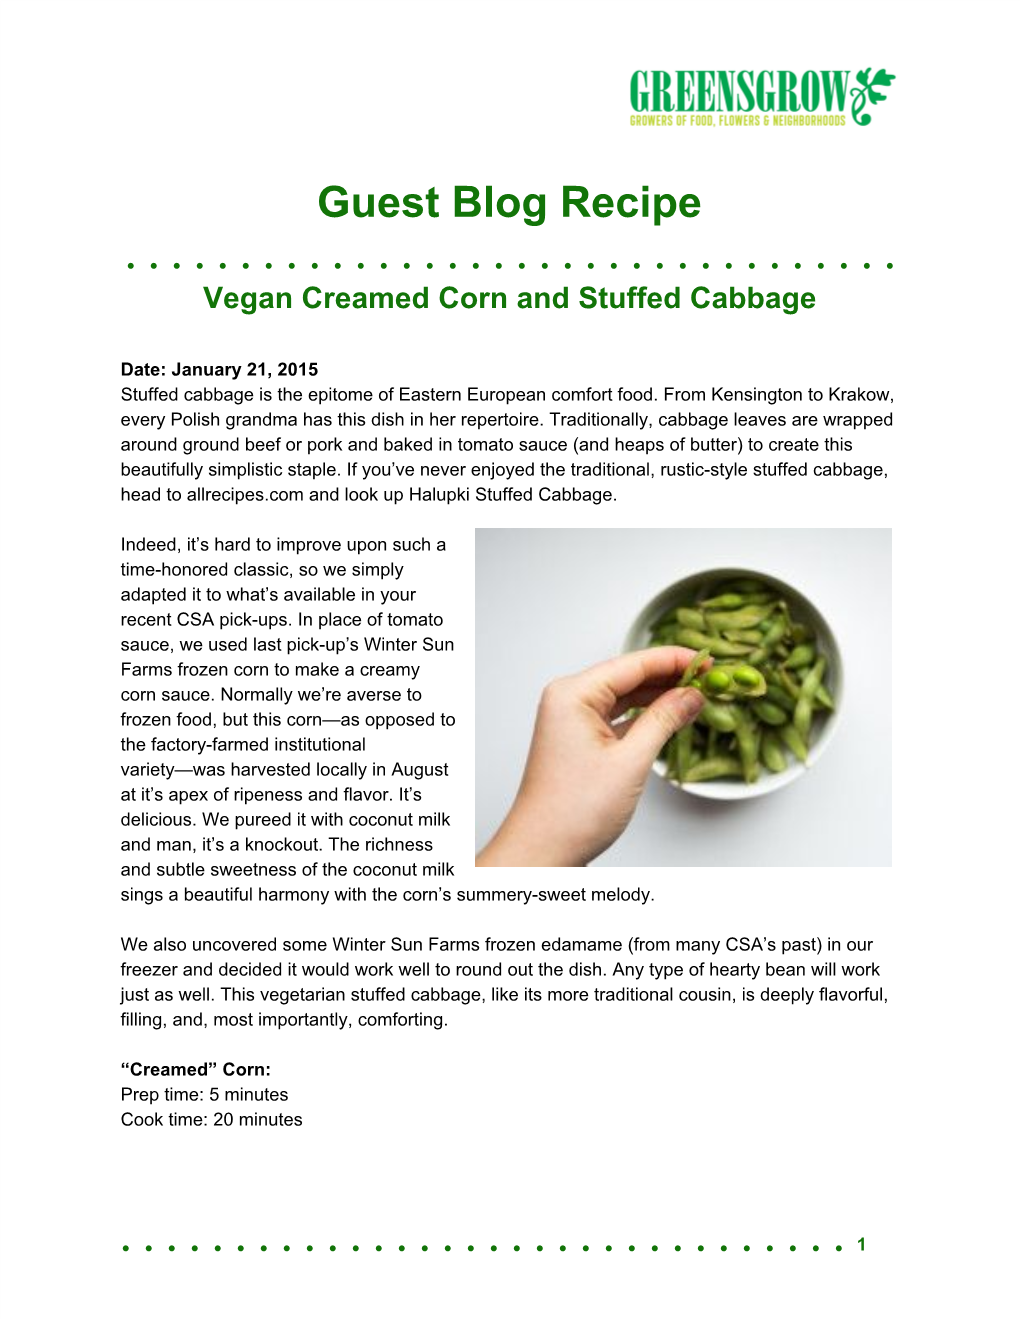 Vegan Creamed Corn and Stuffed Cabbage